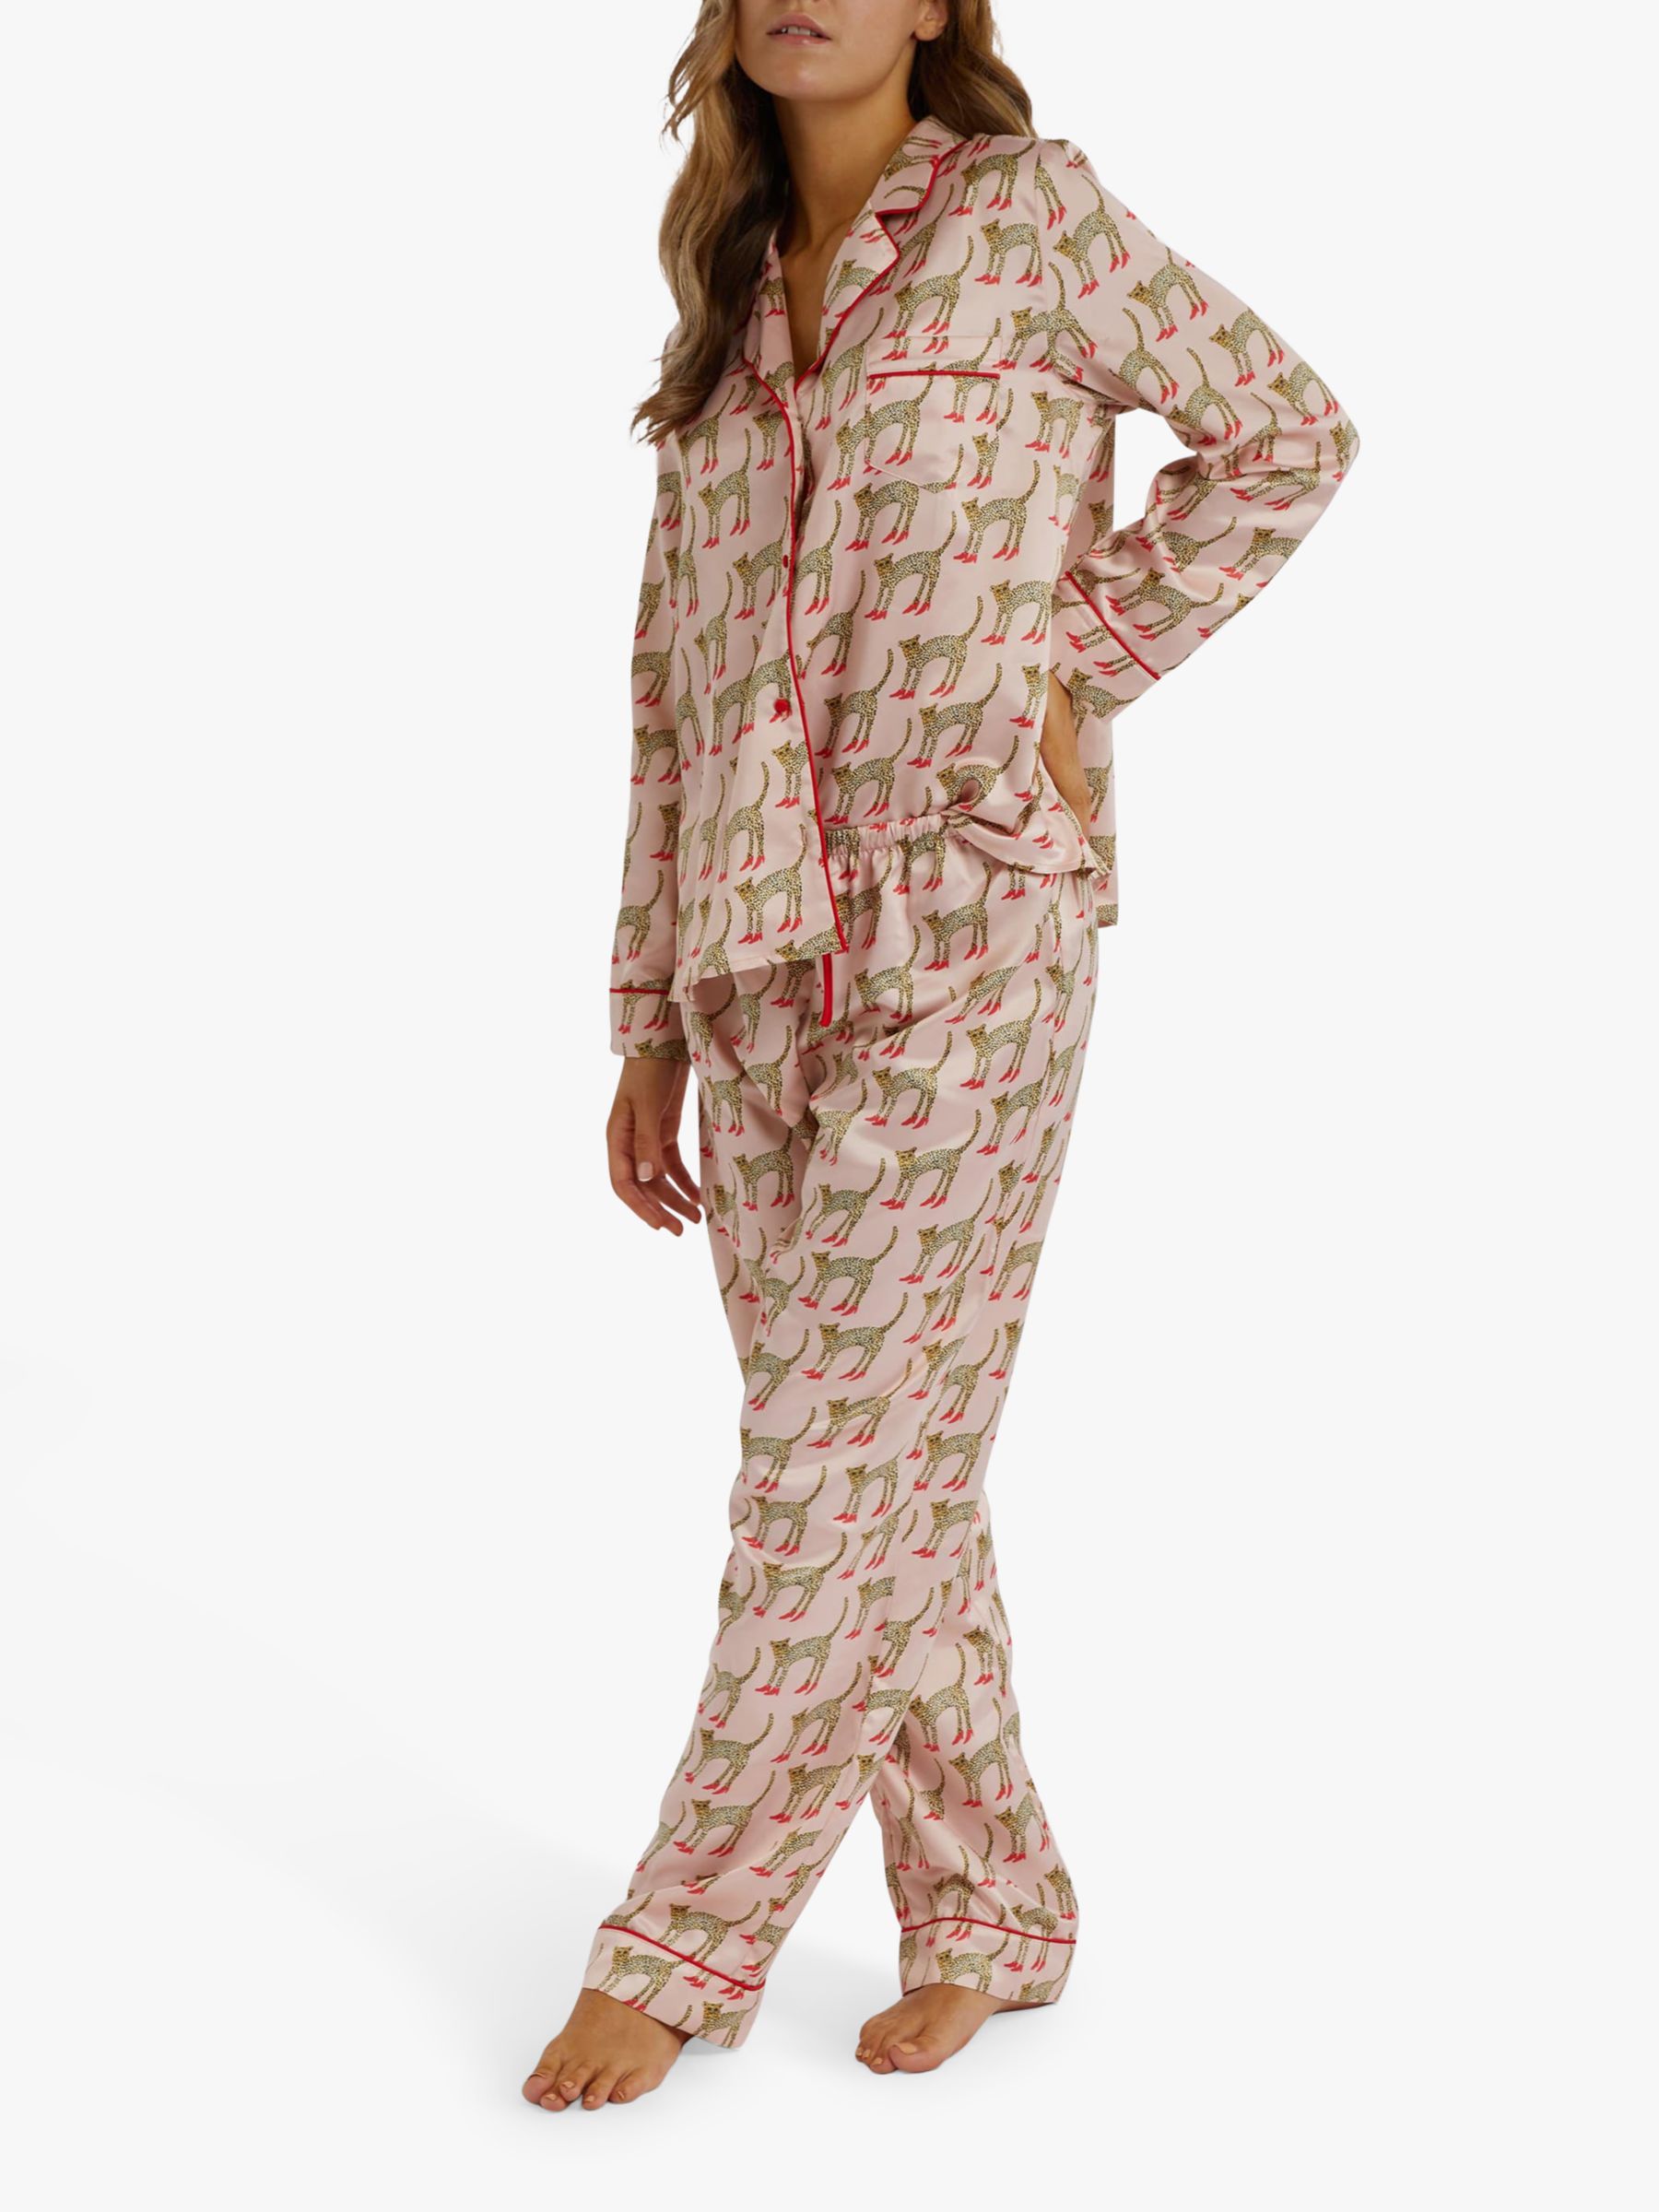 Buy Playful Promises Bouffants Cheetah in Heels Pyjama Bottoms, Mixed Print Online at johnlewis.com